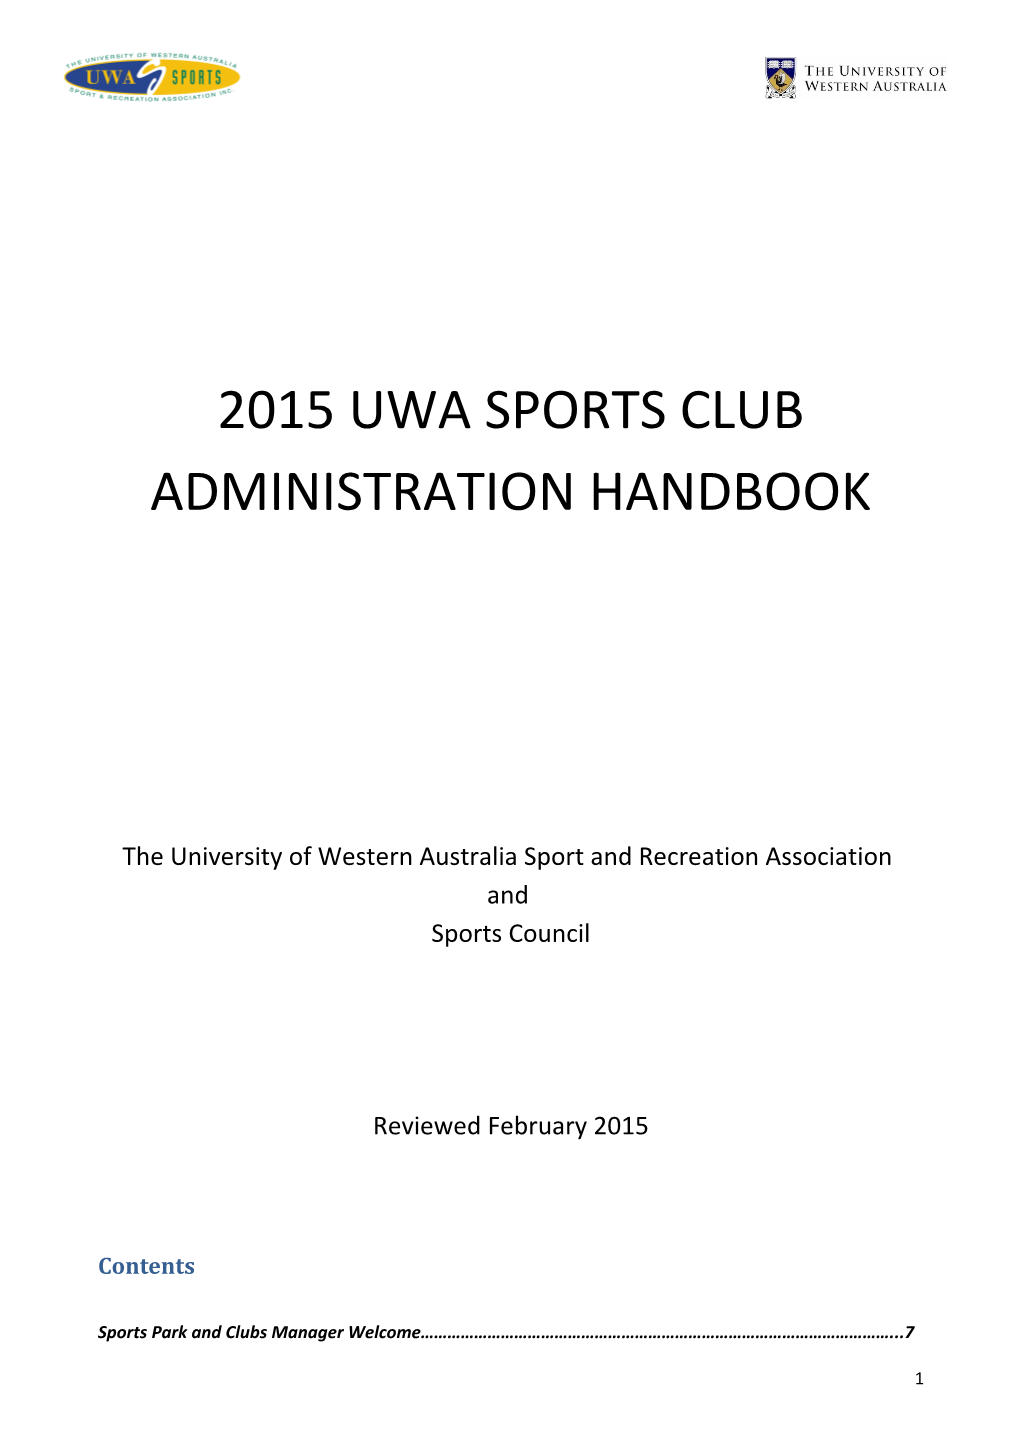 2015 Uwa Sports Club Administration Handbook